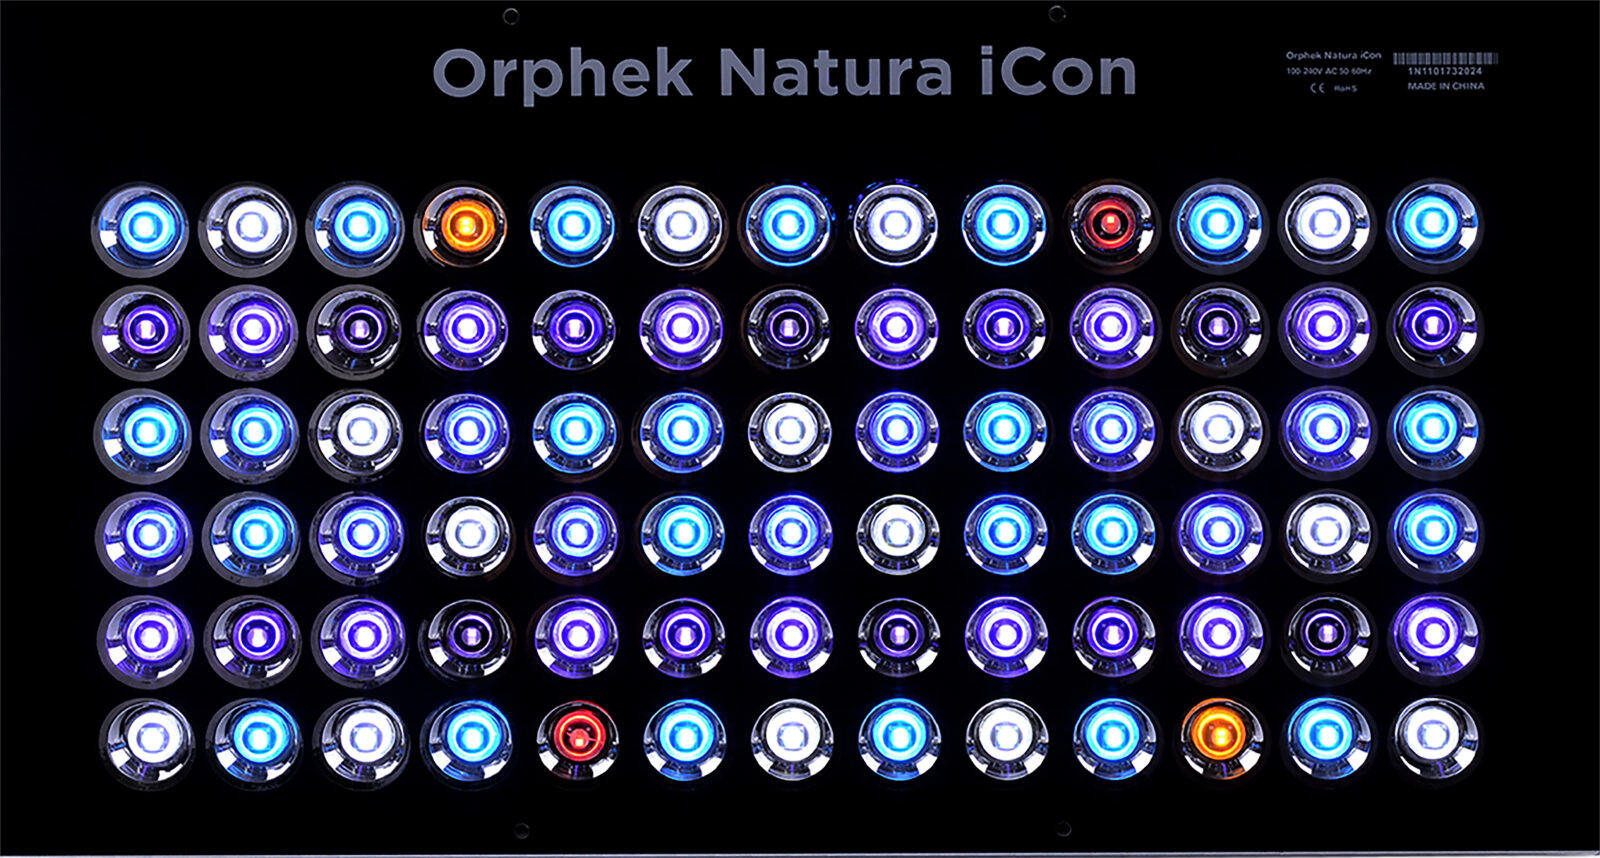 Revolutionary Natura iCon - 6-Watt Dual-Chip LED Light with Mixed Colors